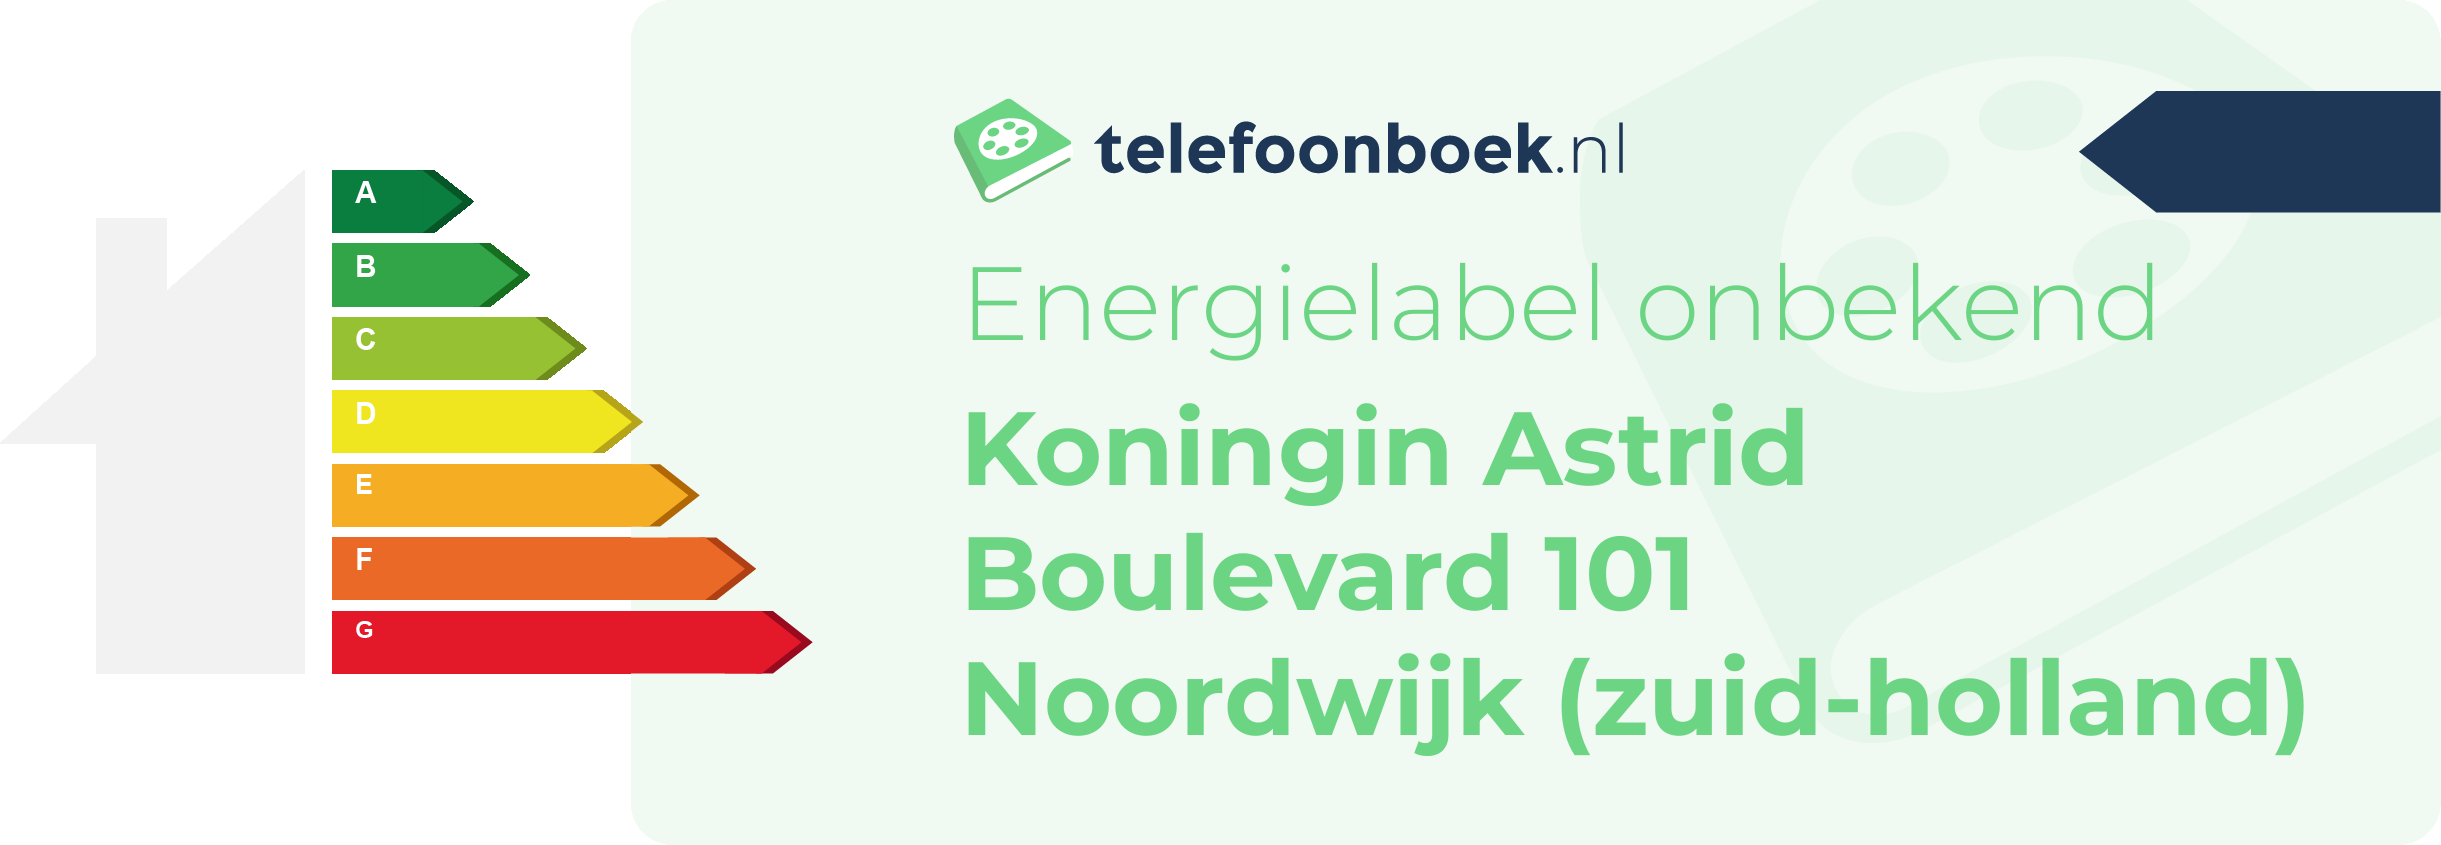 Energielabel Koningin Astrid Boulevard 101 Noordwijk (Zuid-Holland)